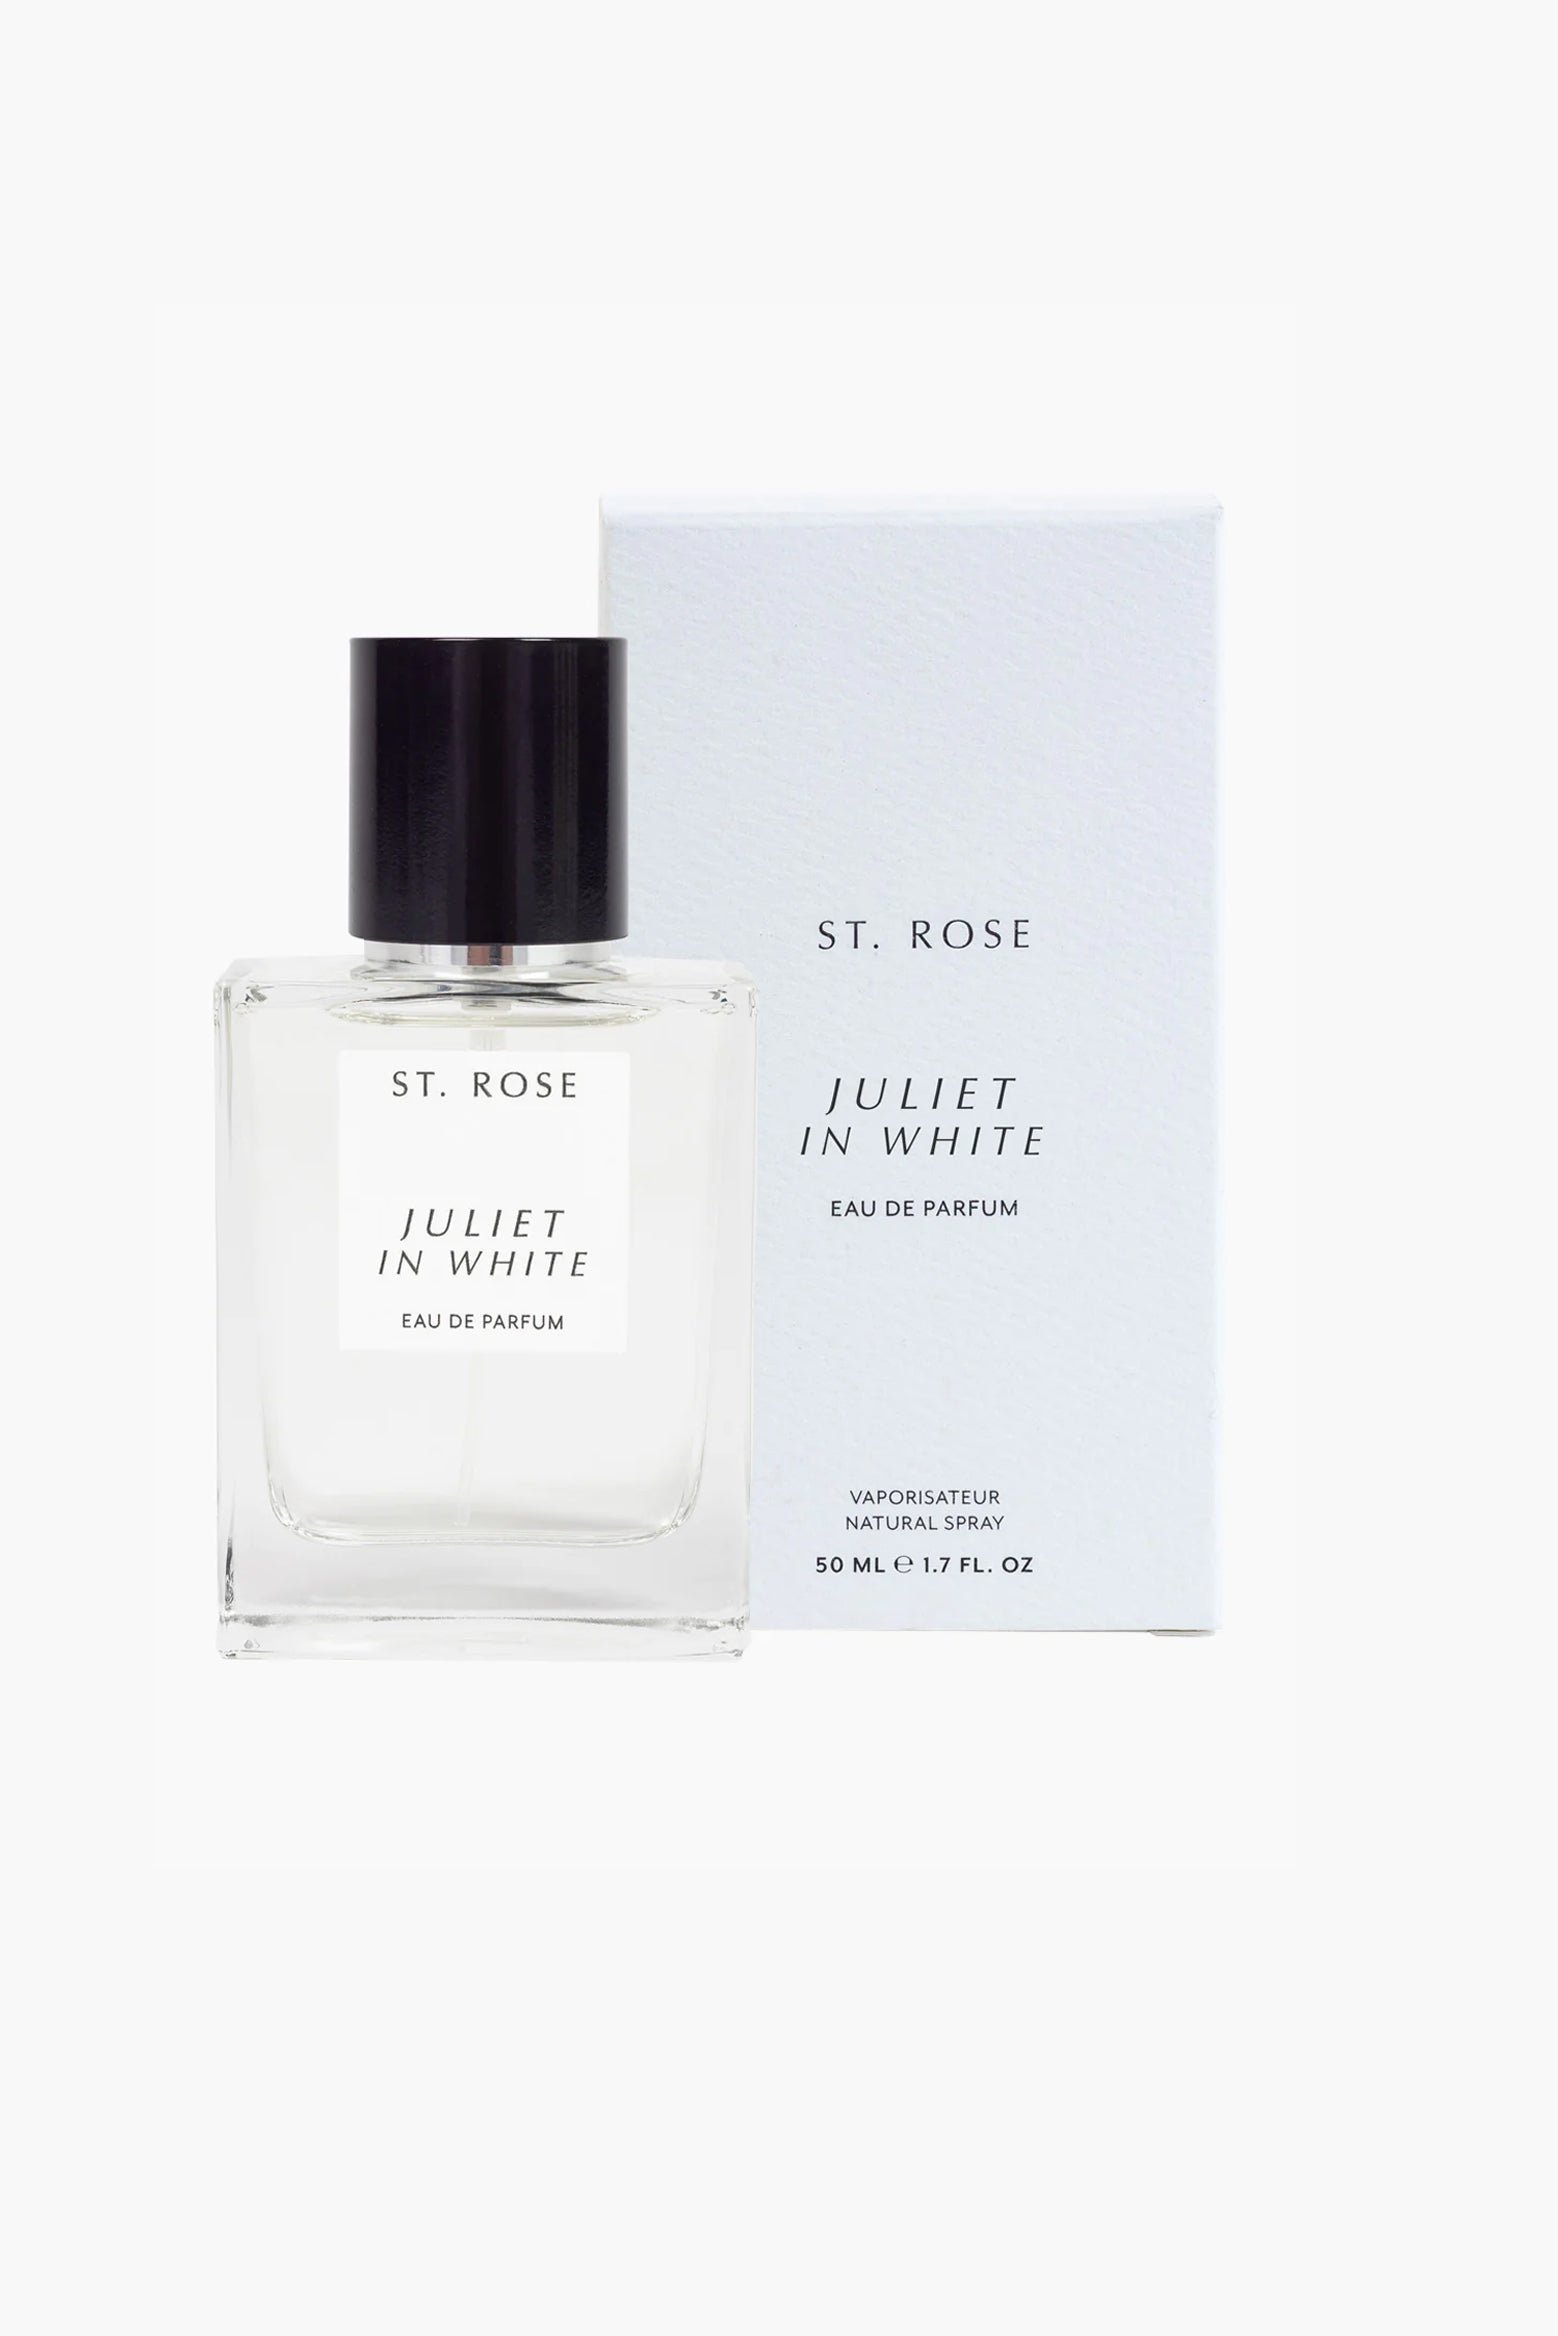 St. Rose Juliet In White Eau De Parfum available at The New Trend